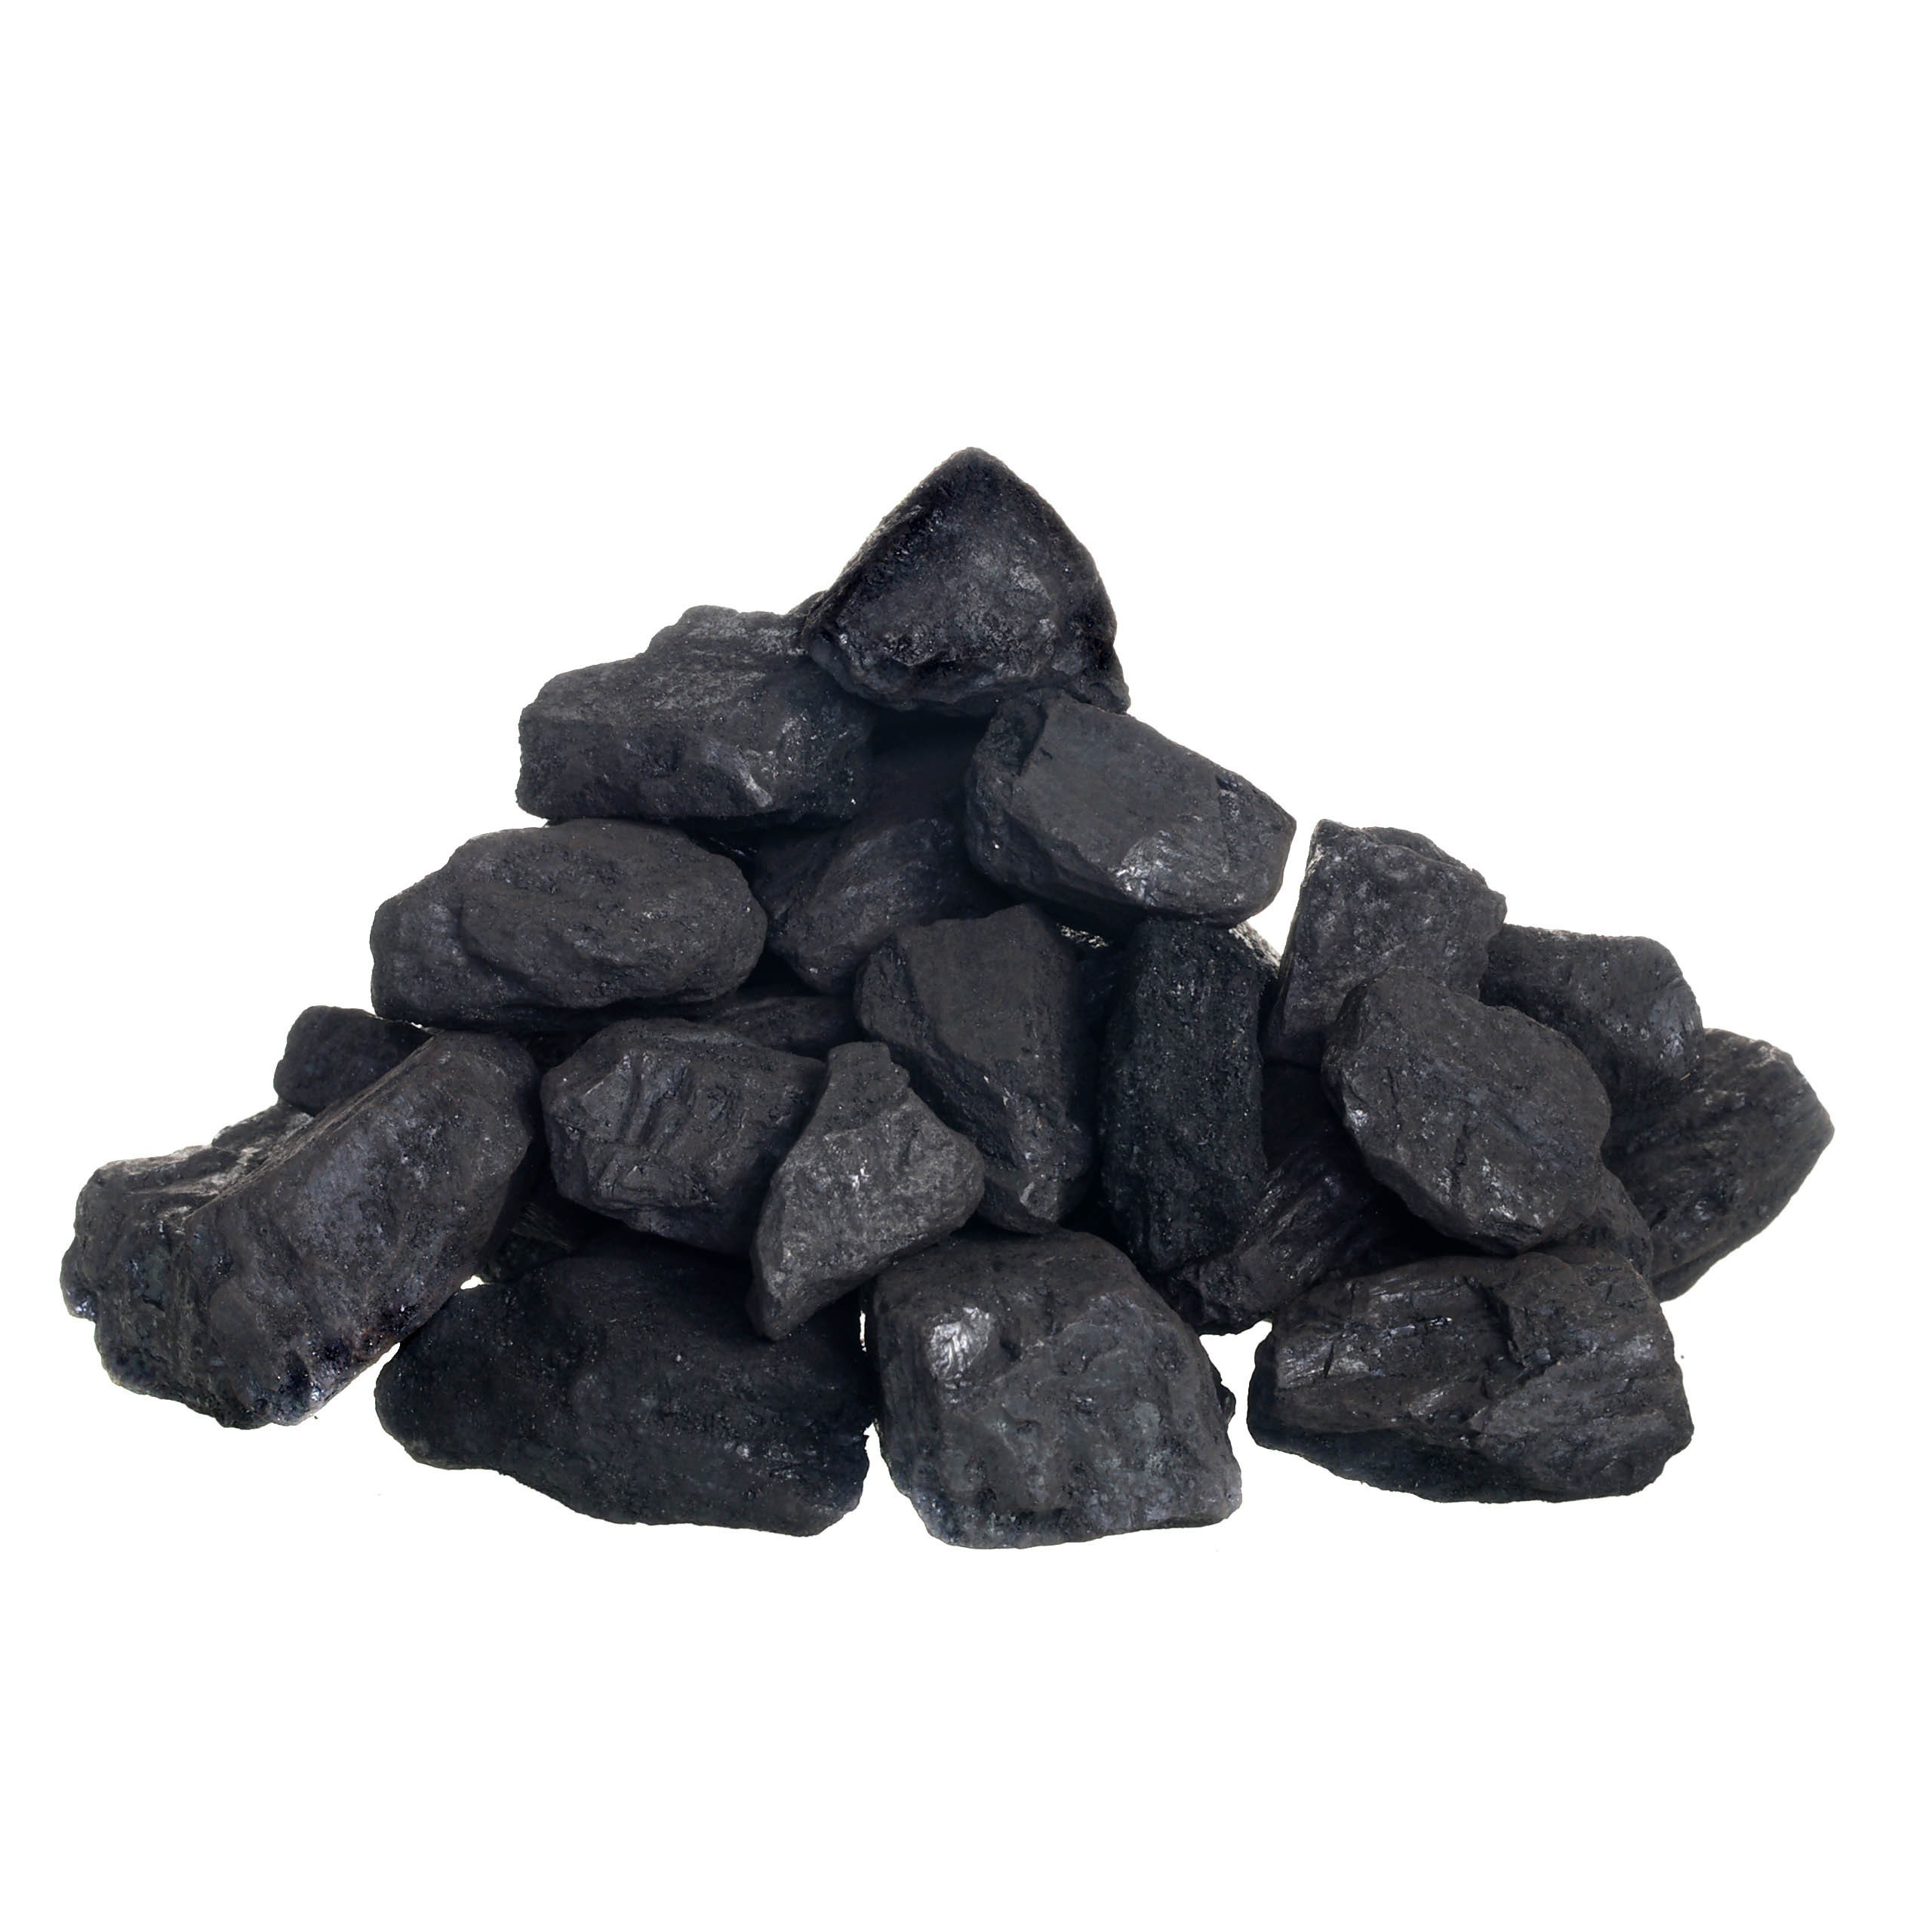 Warmglow Premium House Coal 100 bags Buy coal online